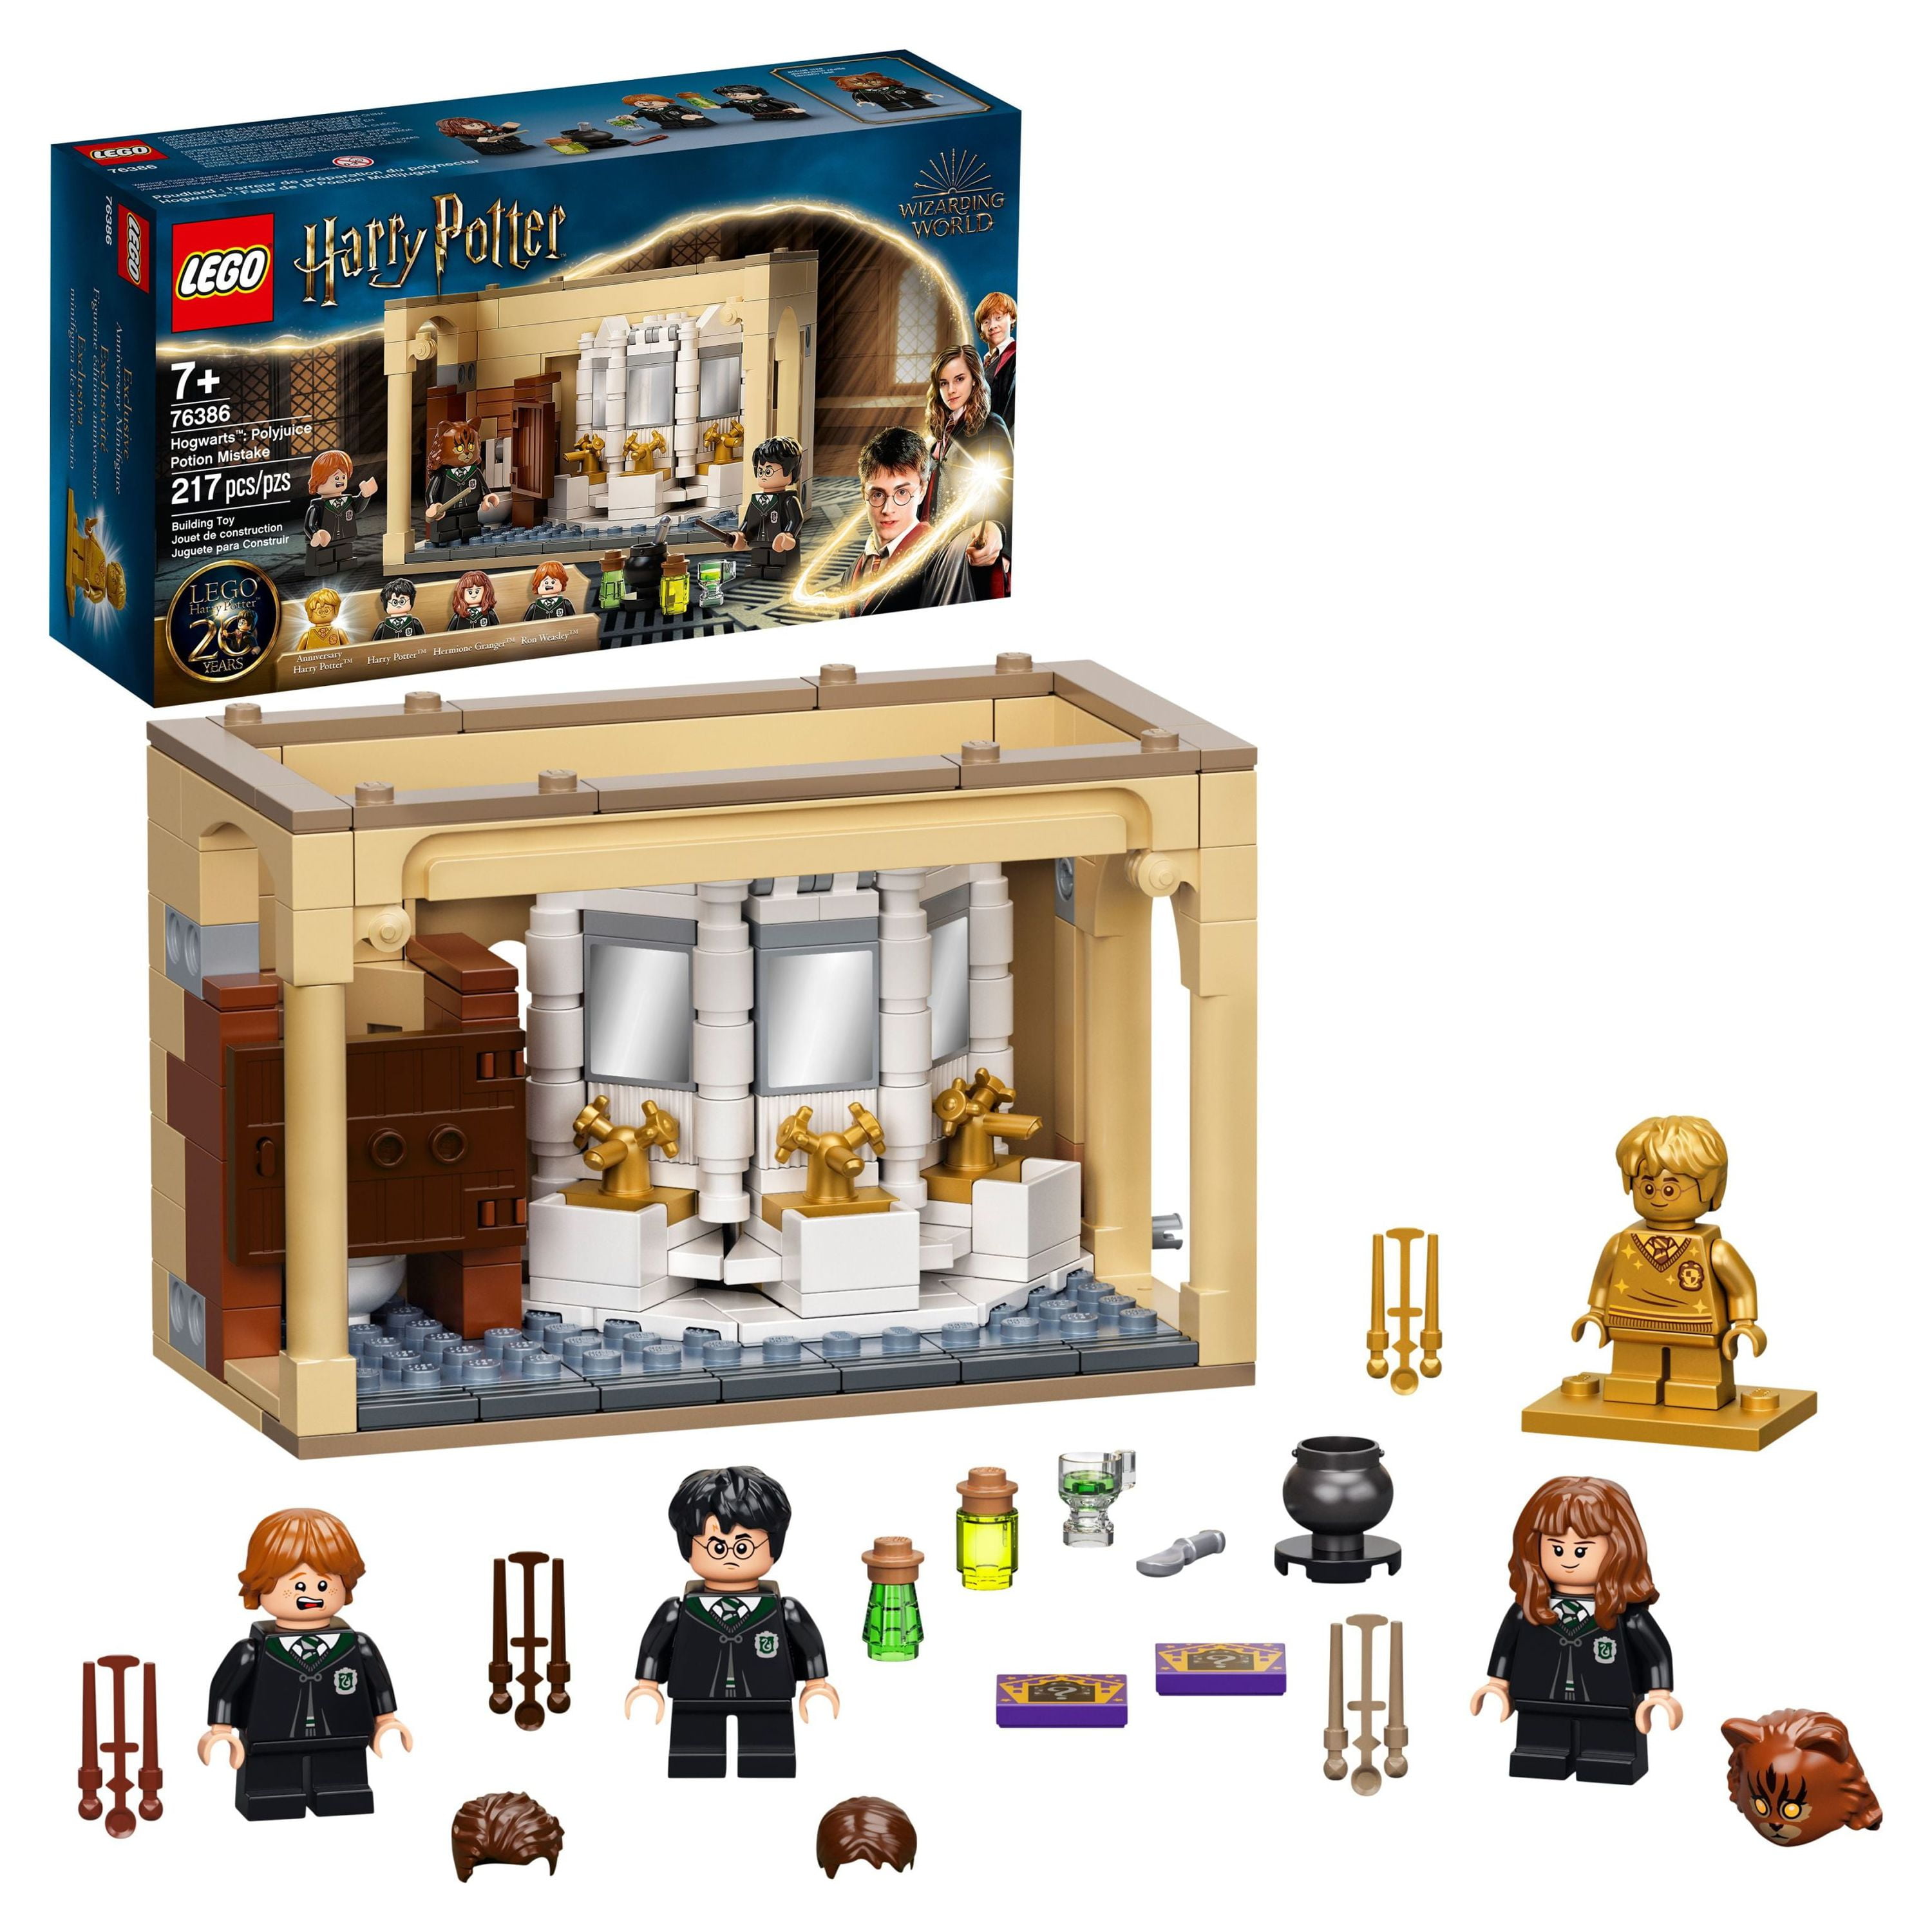 LEGO Minifigures Harry Potter checklist  Harry potter lego sets, Lego  harry potter, Lego harry potter minifigures